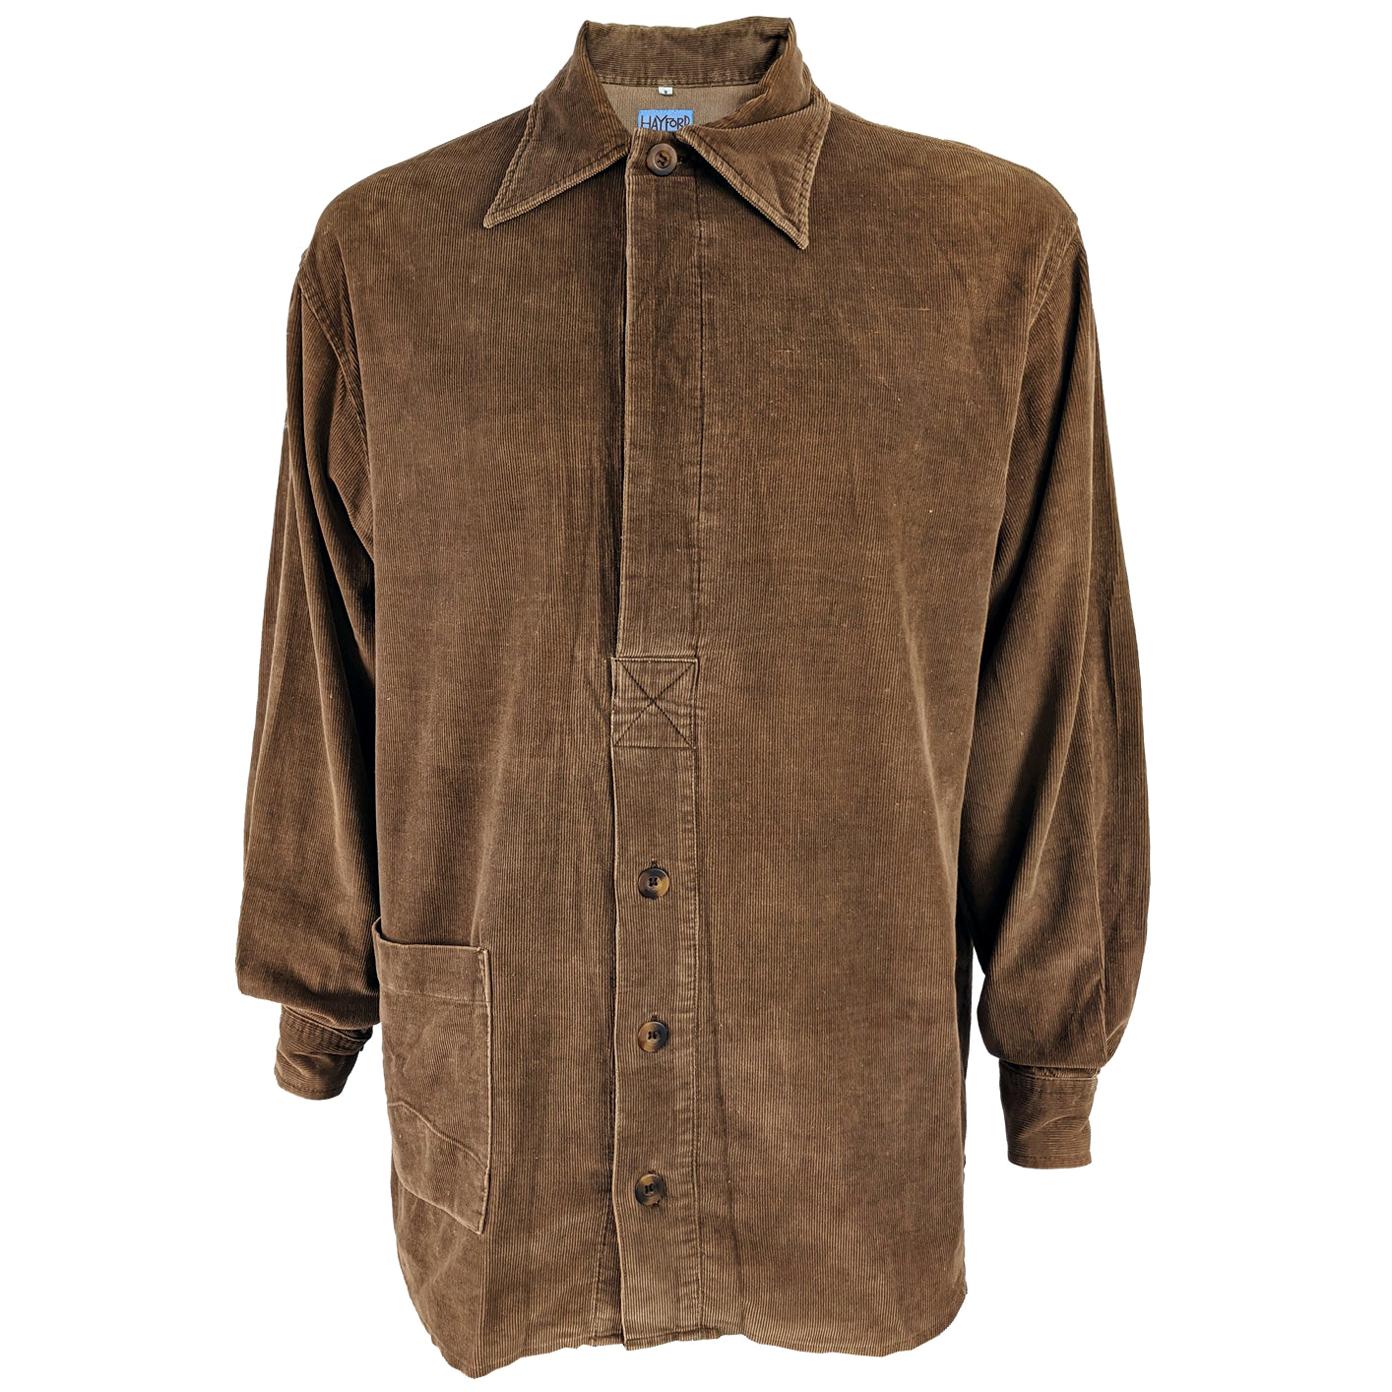 Joe Casely Hayford Vintage Brown Cord Shirt, 1990s